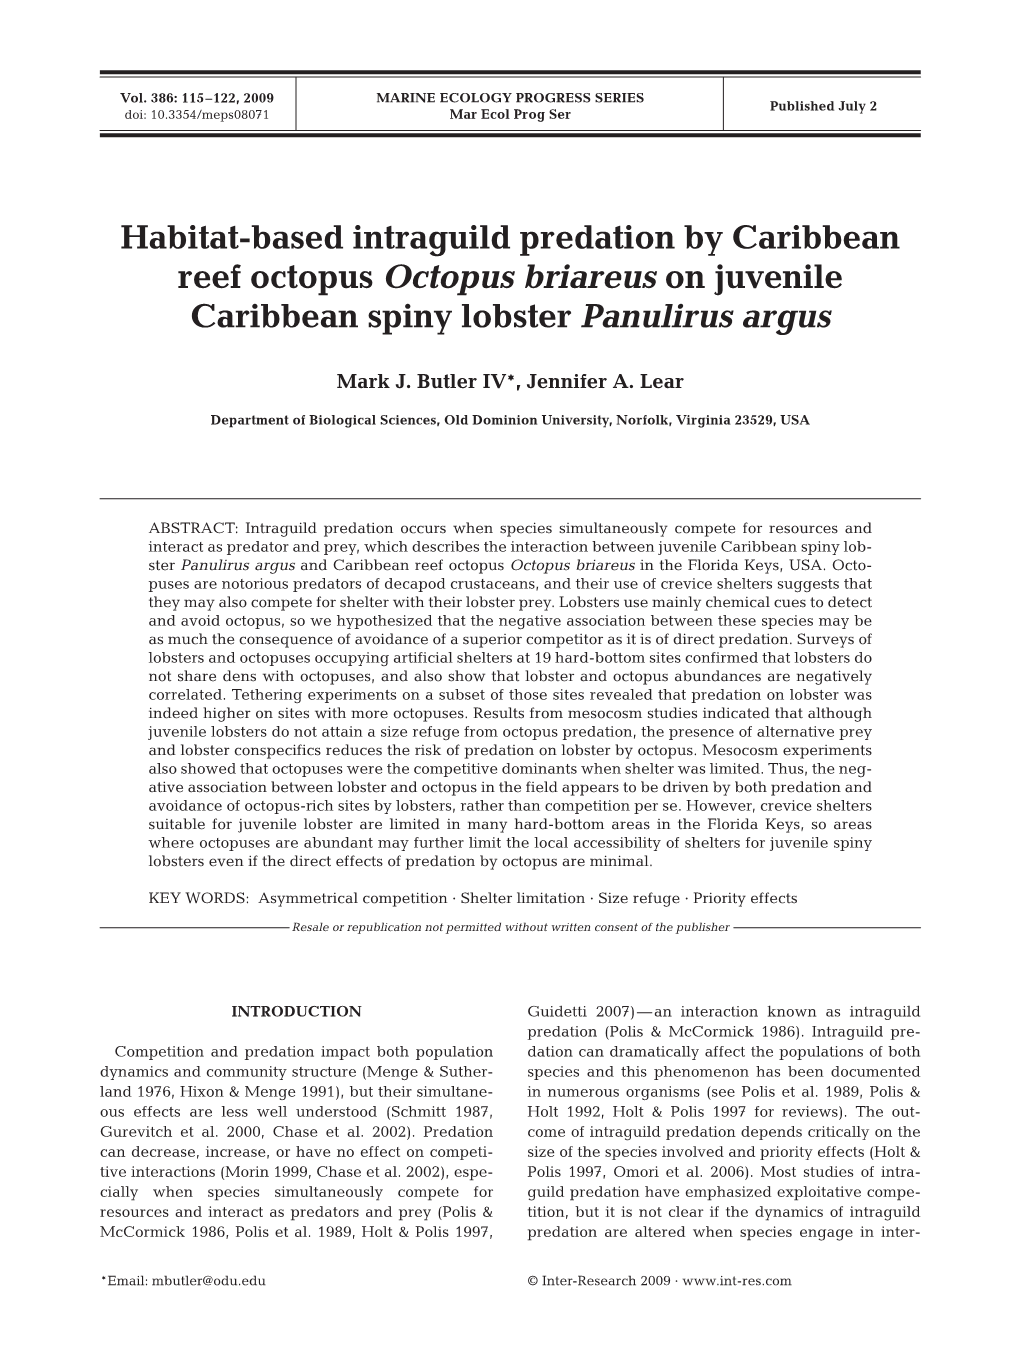 Habitat-Based Intraguild Predation by Caribbean Reef Octopus Octopus Briareus on Juvenile Caribbean Spiny Lobster Panulirus Argus